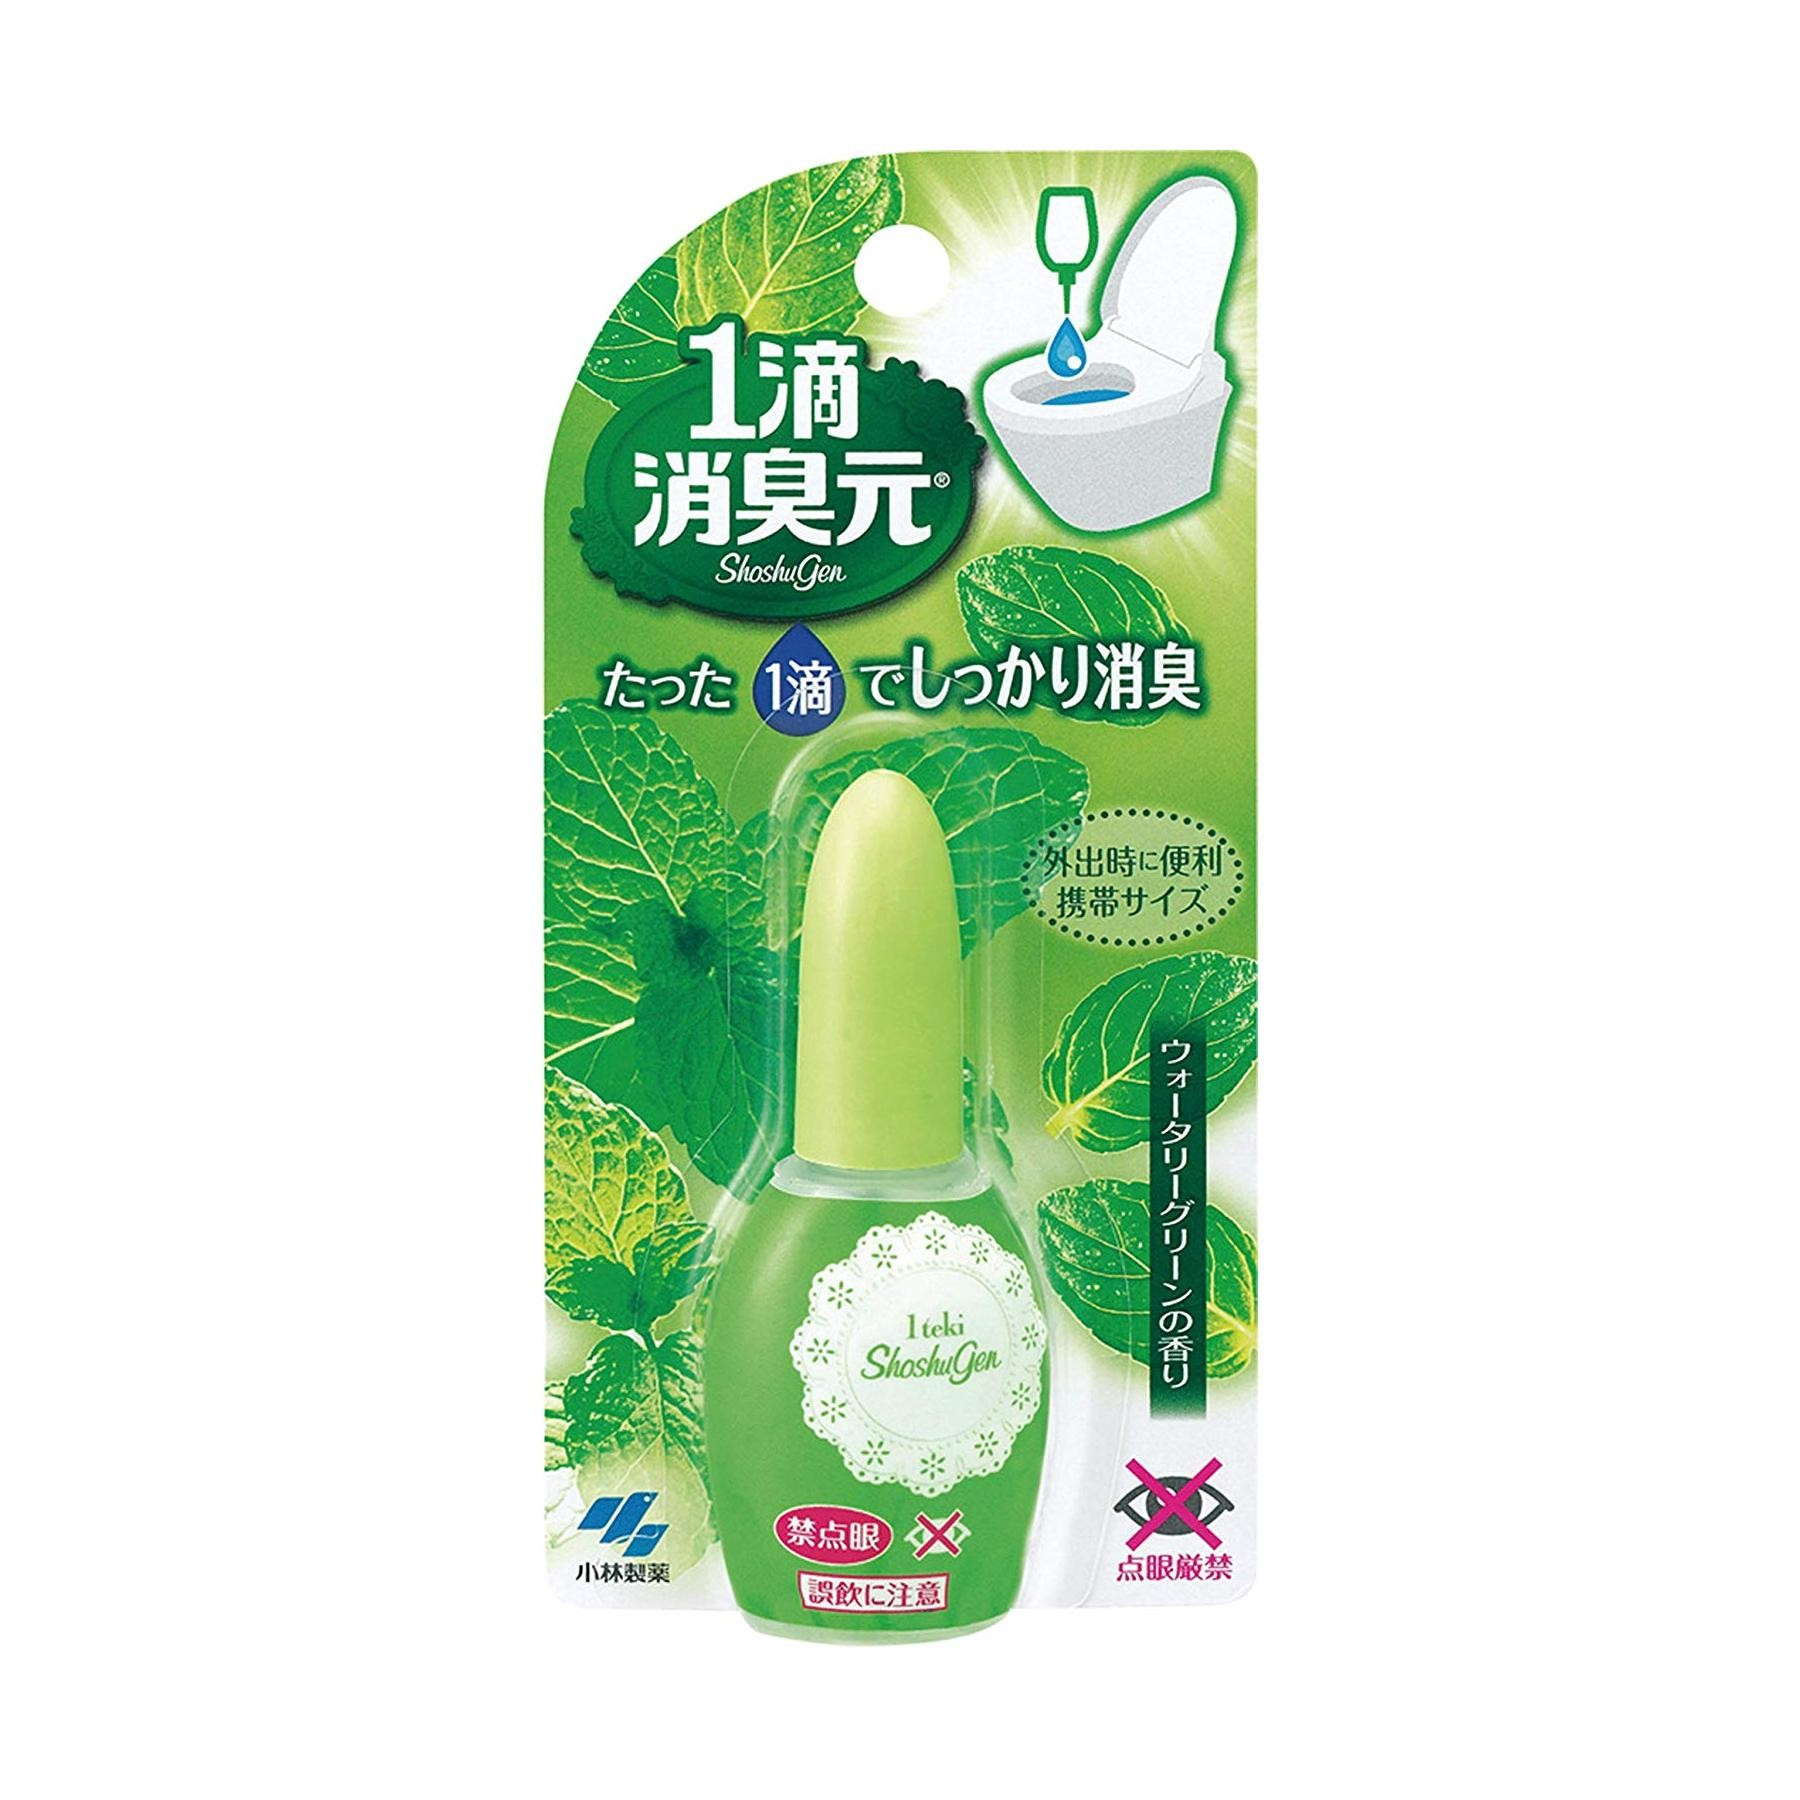 kobayashi-pharmaceutical-one-drop-deodorant-toilet-cleaner-deodorant-natural-fragrance-green